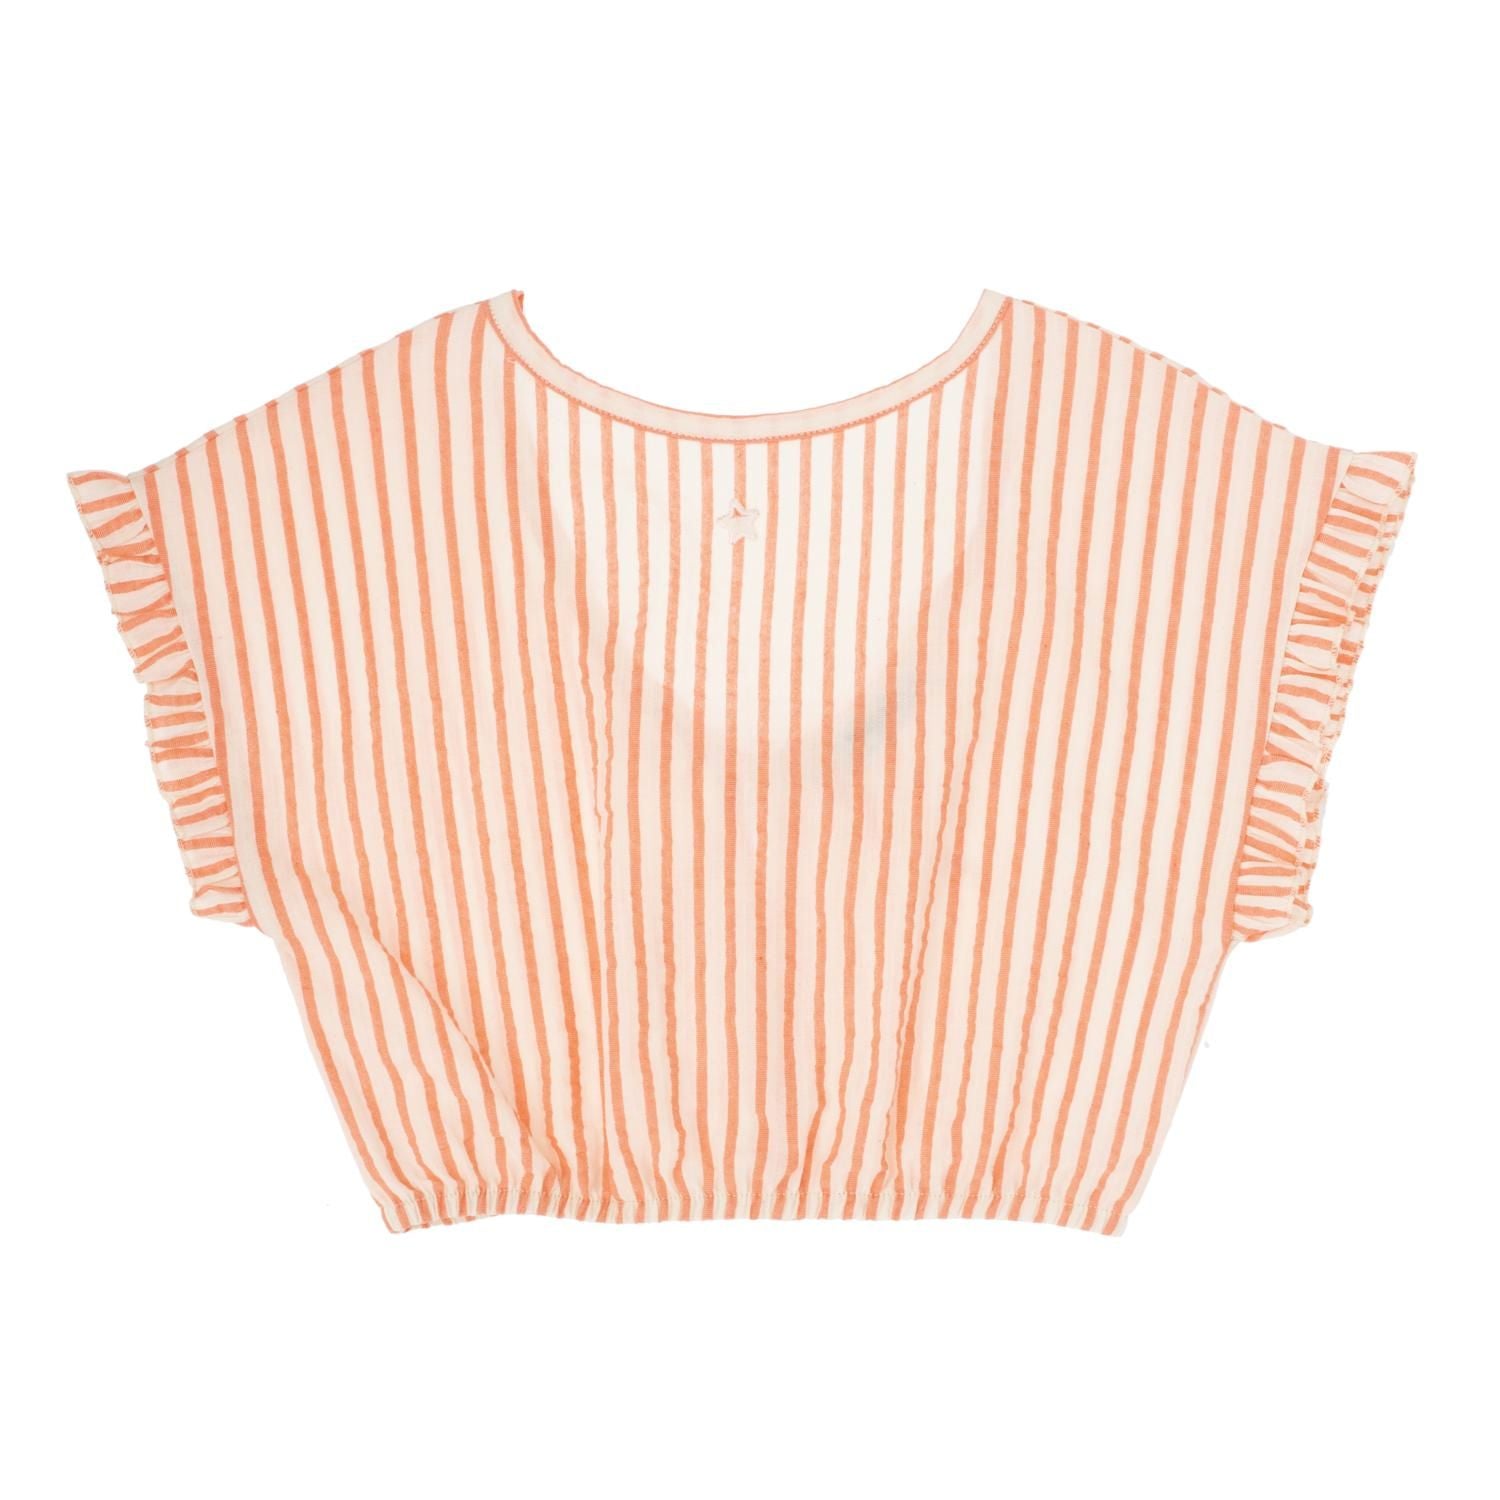 Tocoto Vintage Striped Blouse with Back Neckline - Pink